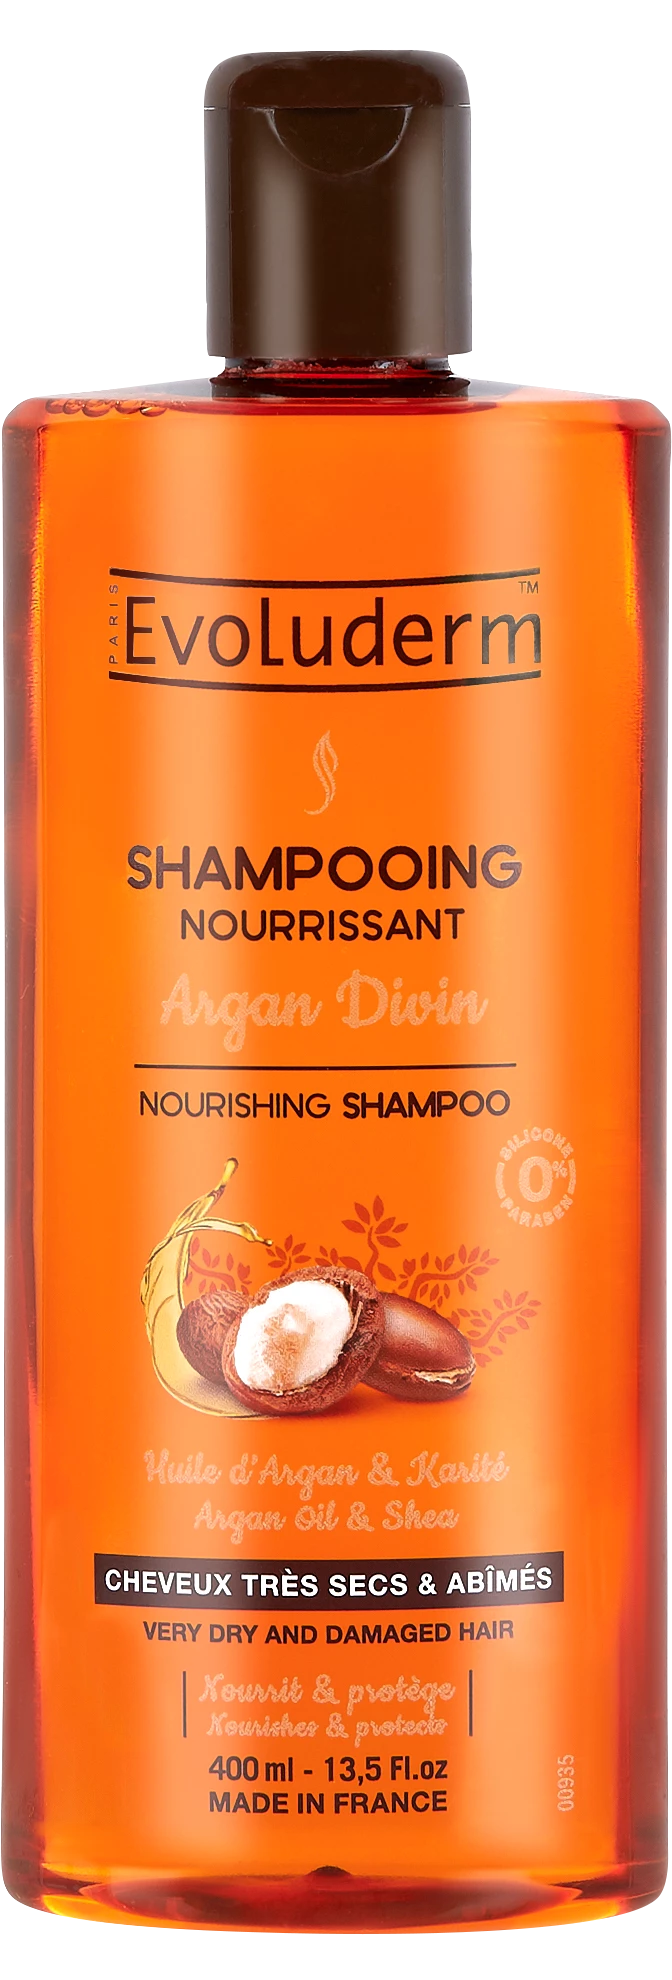 Shampoo Argan Divin, 400ml - EVOLUDERM